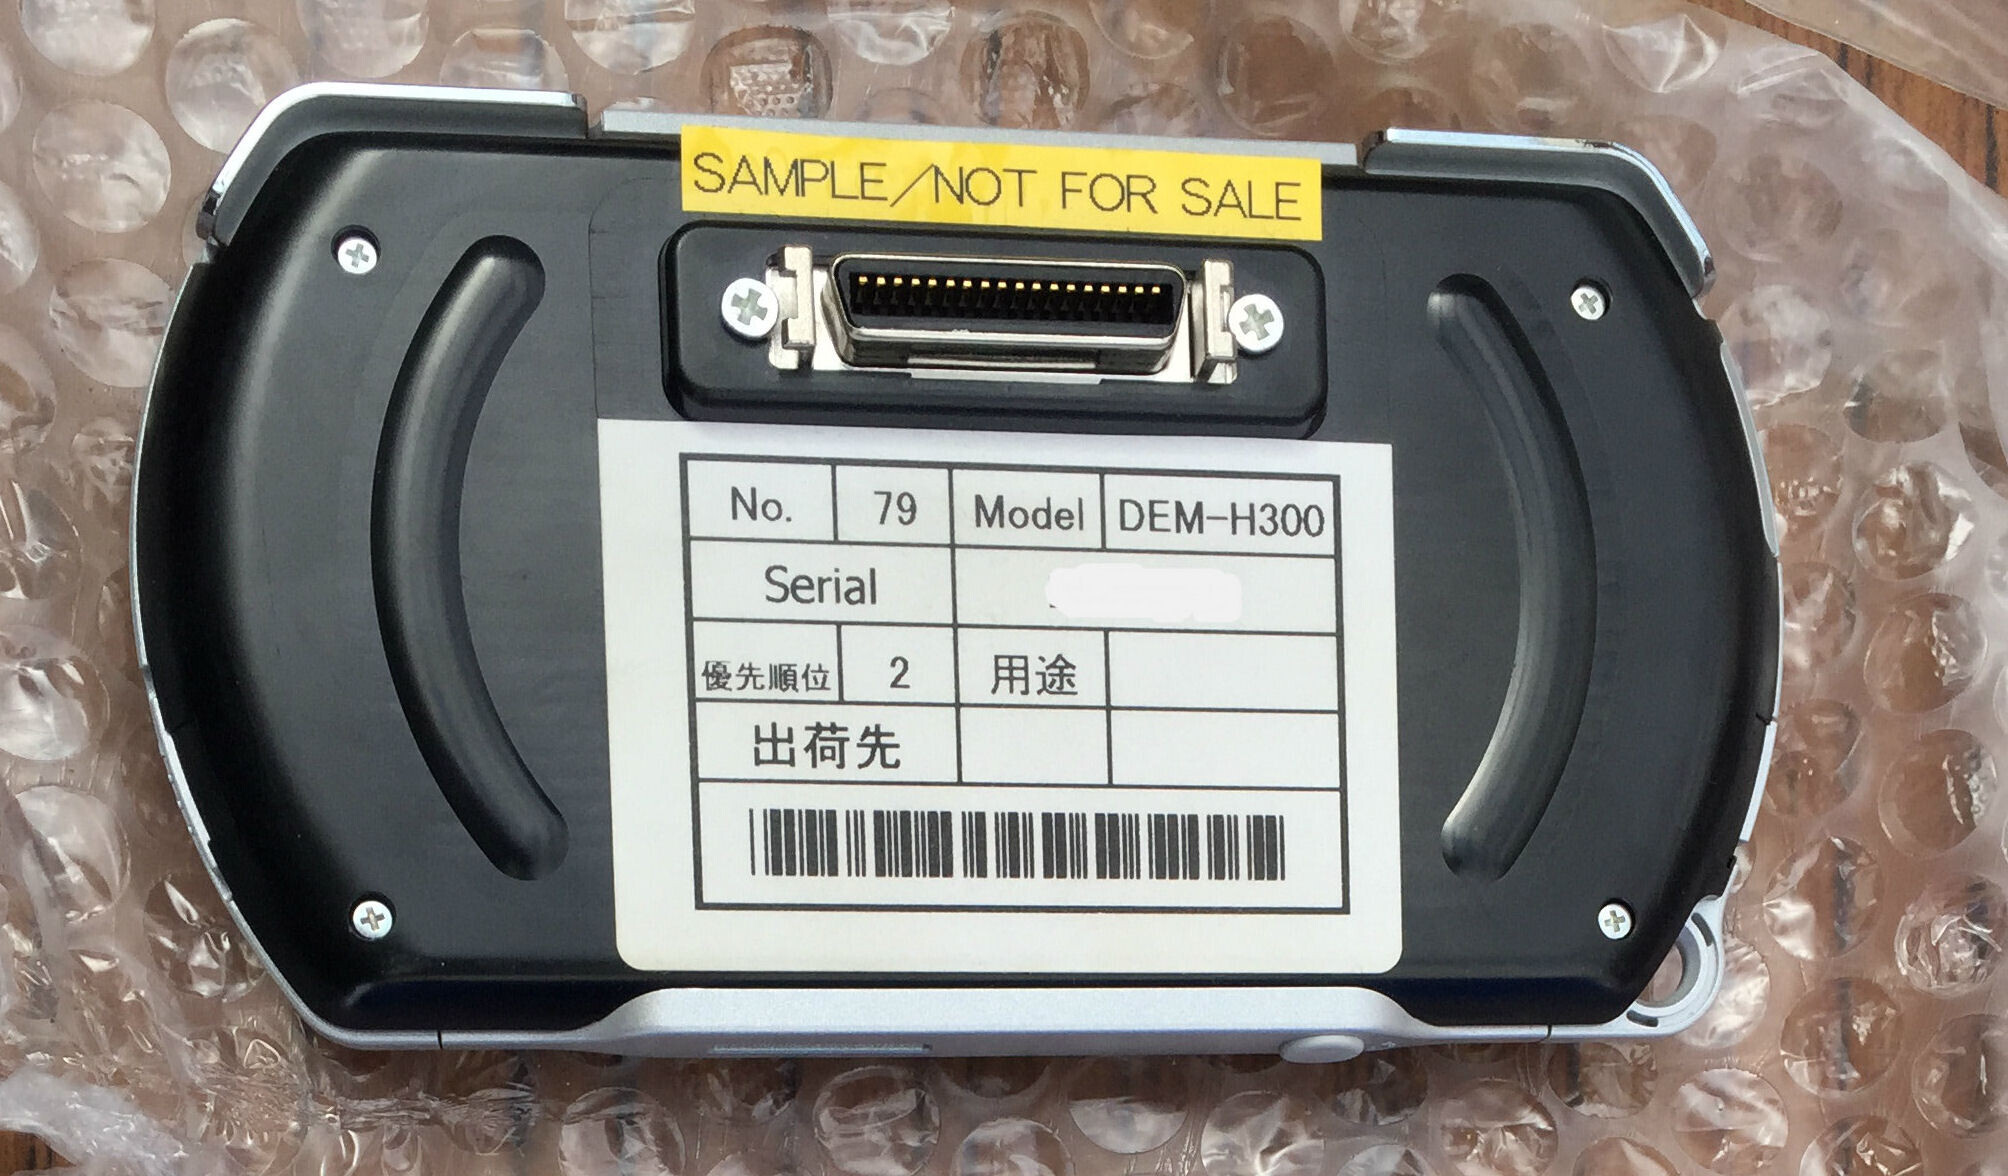 Sony PSP DEM-H300 Prototype Controller